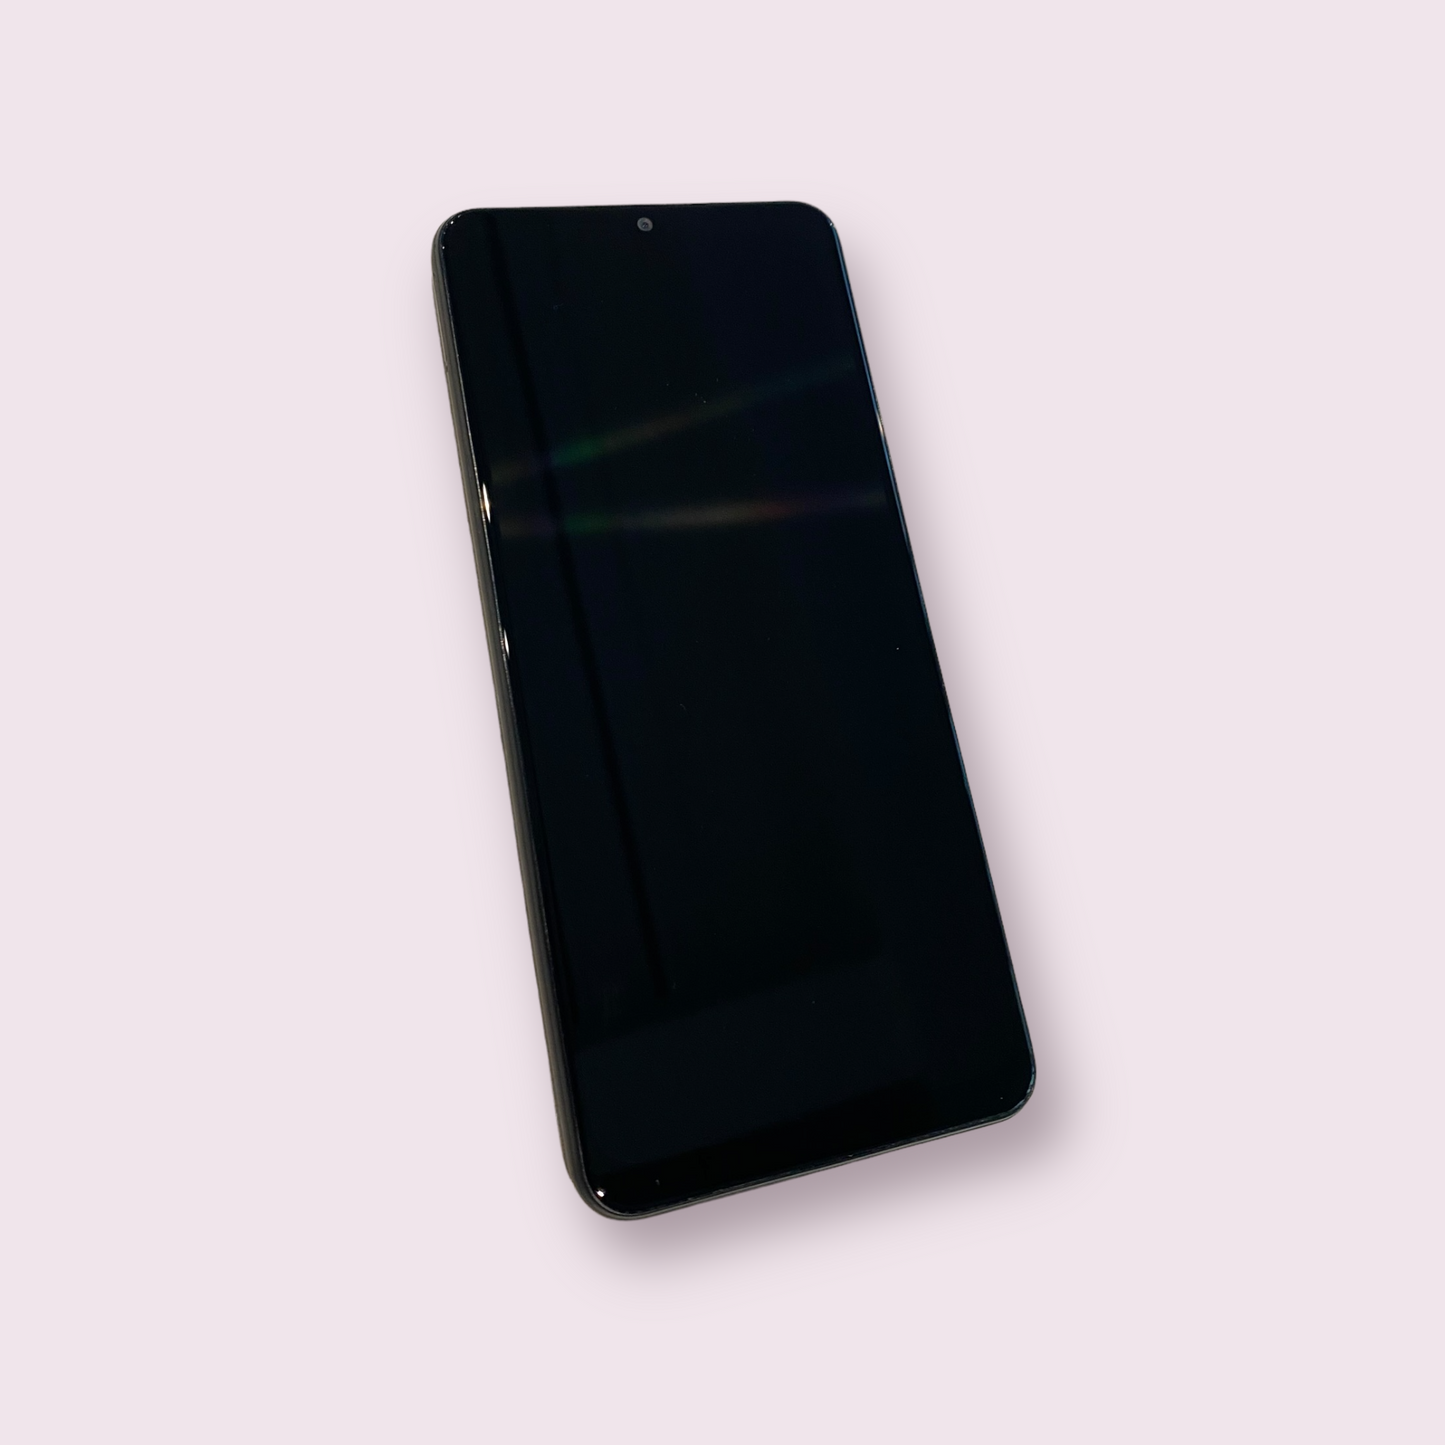 Samsung Galaxy A12 SM-A125F/DS Dual Sim 64GB black smartphone - Unlocked - Grade A